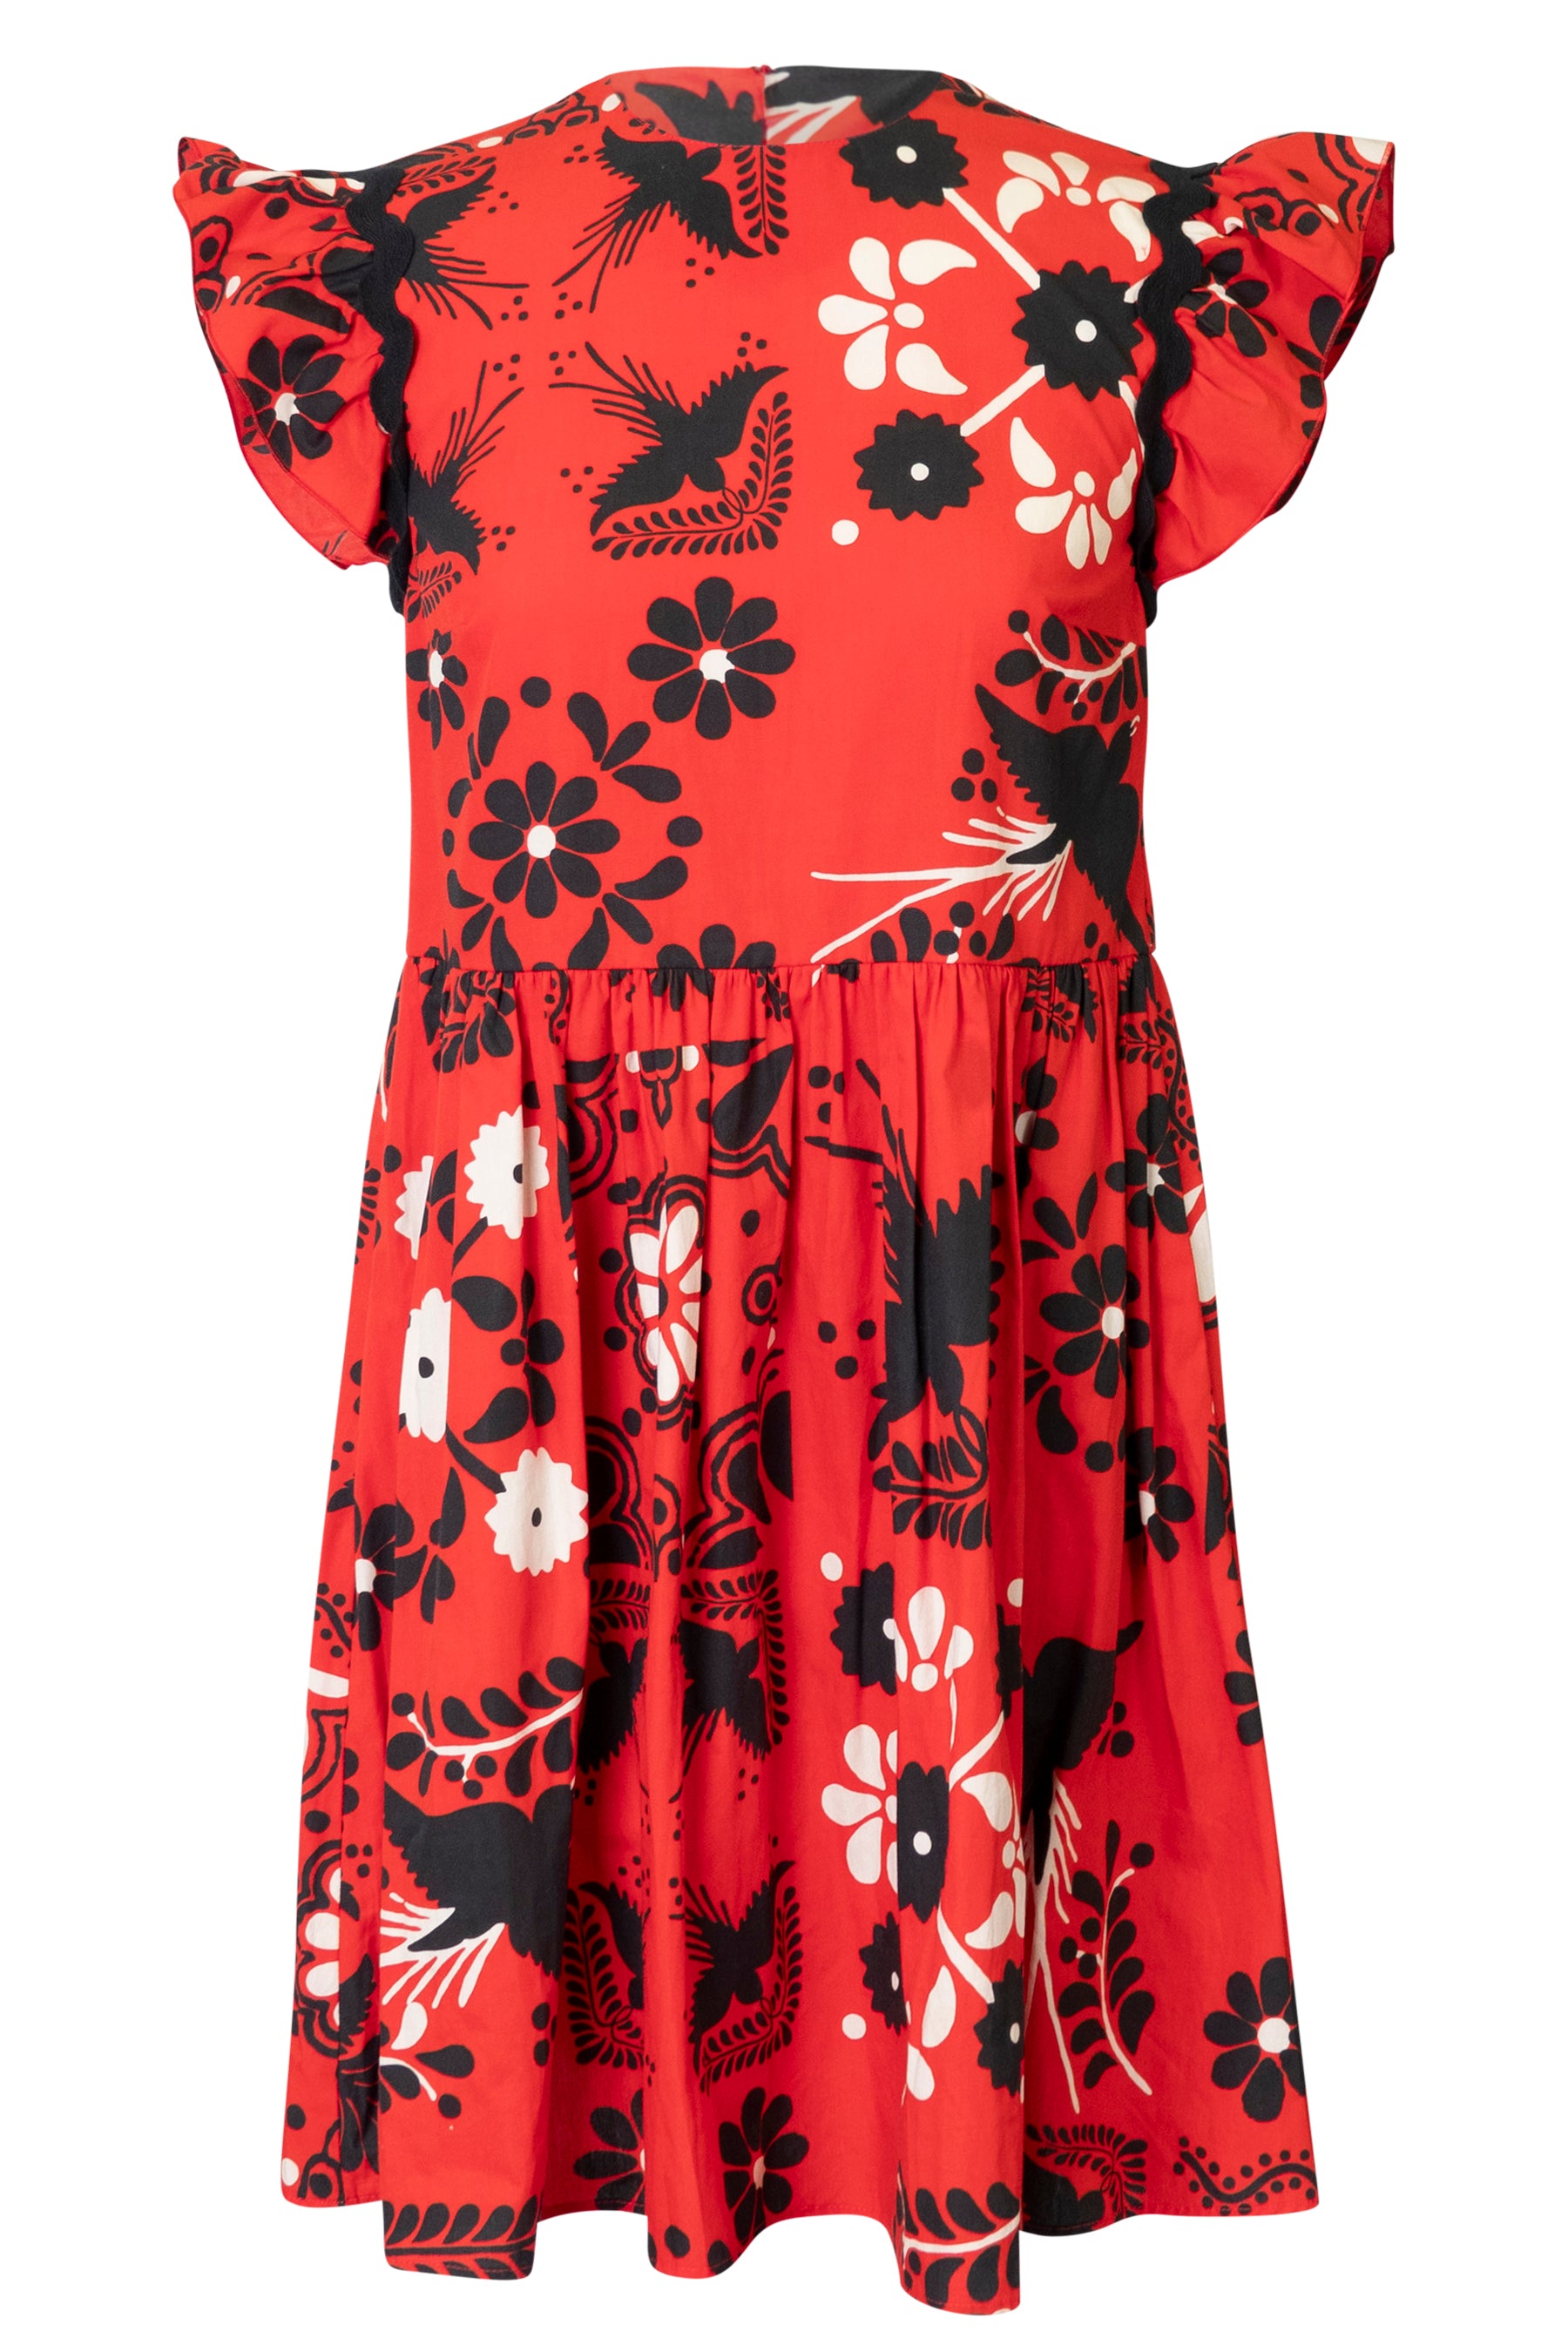 Red Valentino Floral Dress – Dora Maar